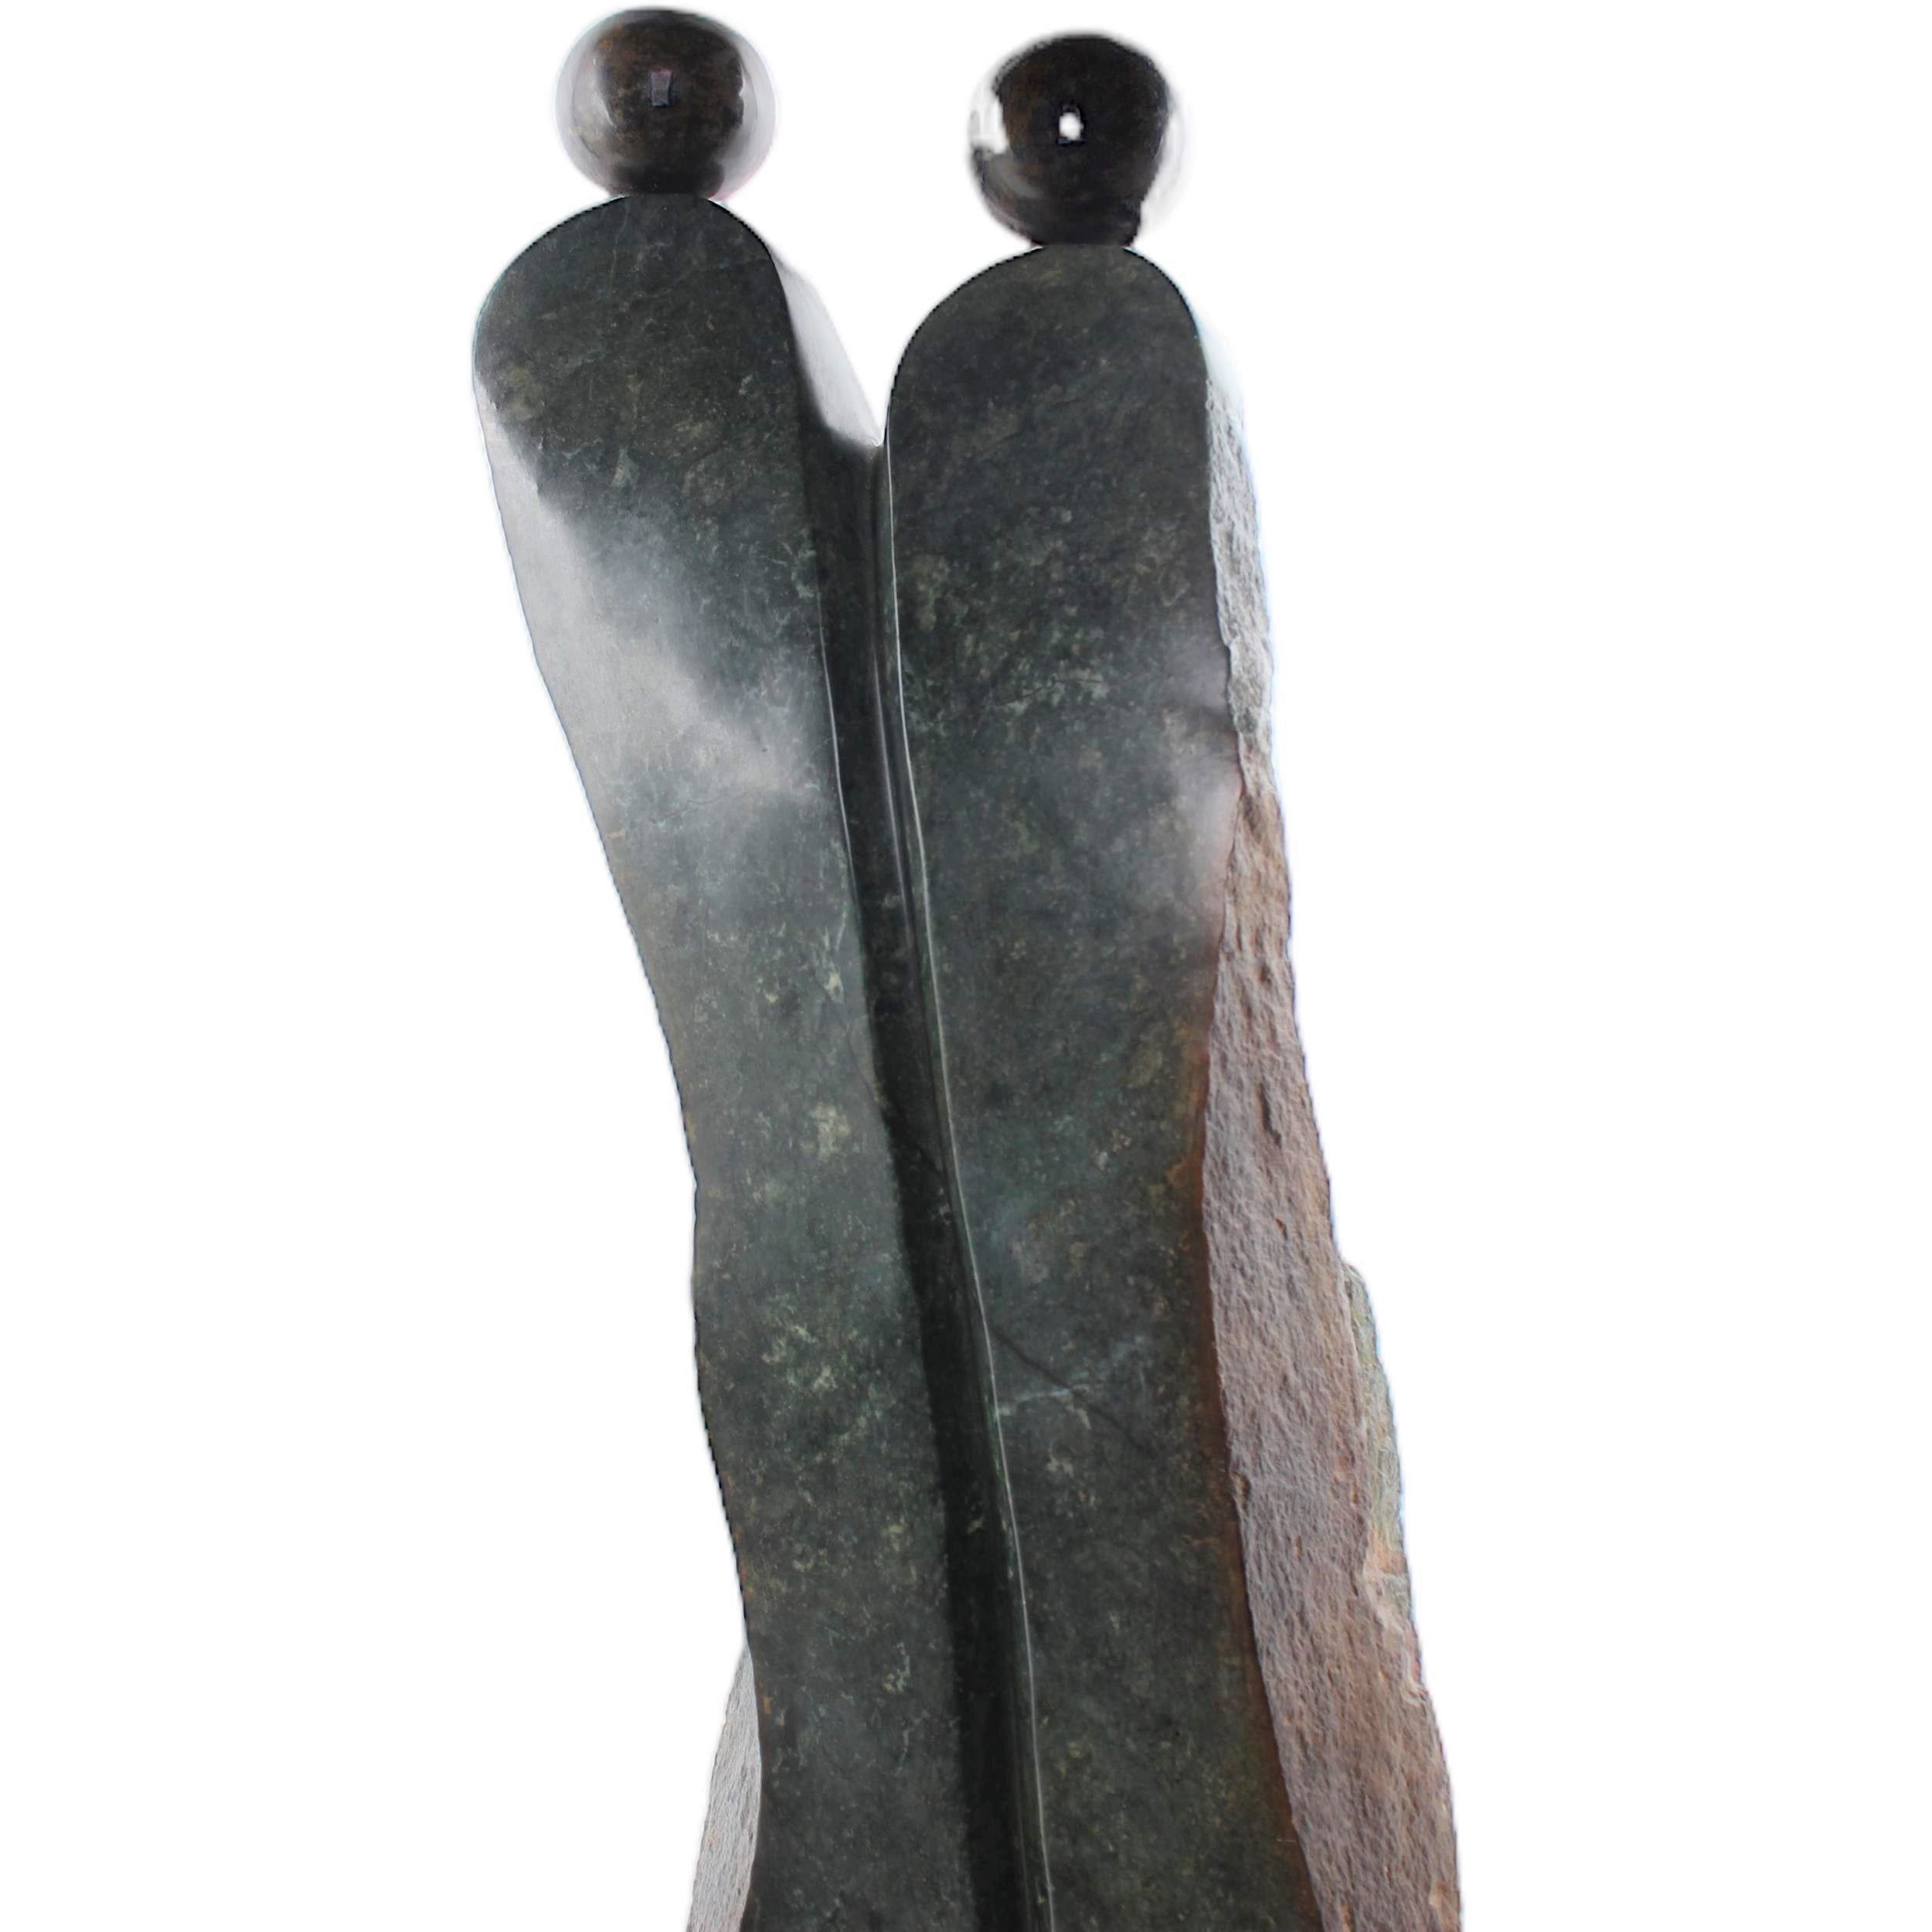 Shona Tribe Opal Stone Lovers ~38.2" Tall - Lovers